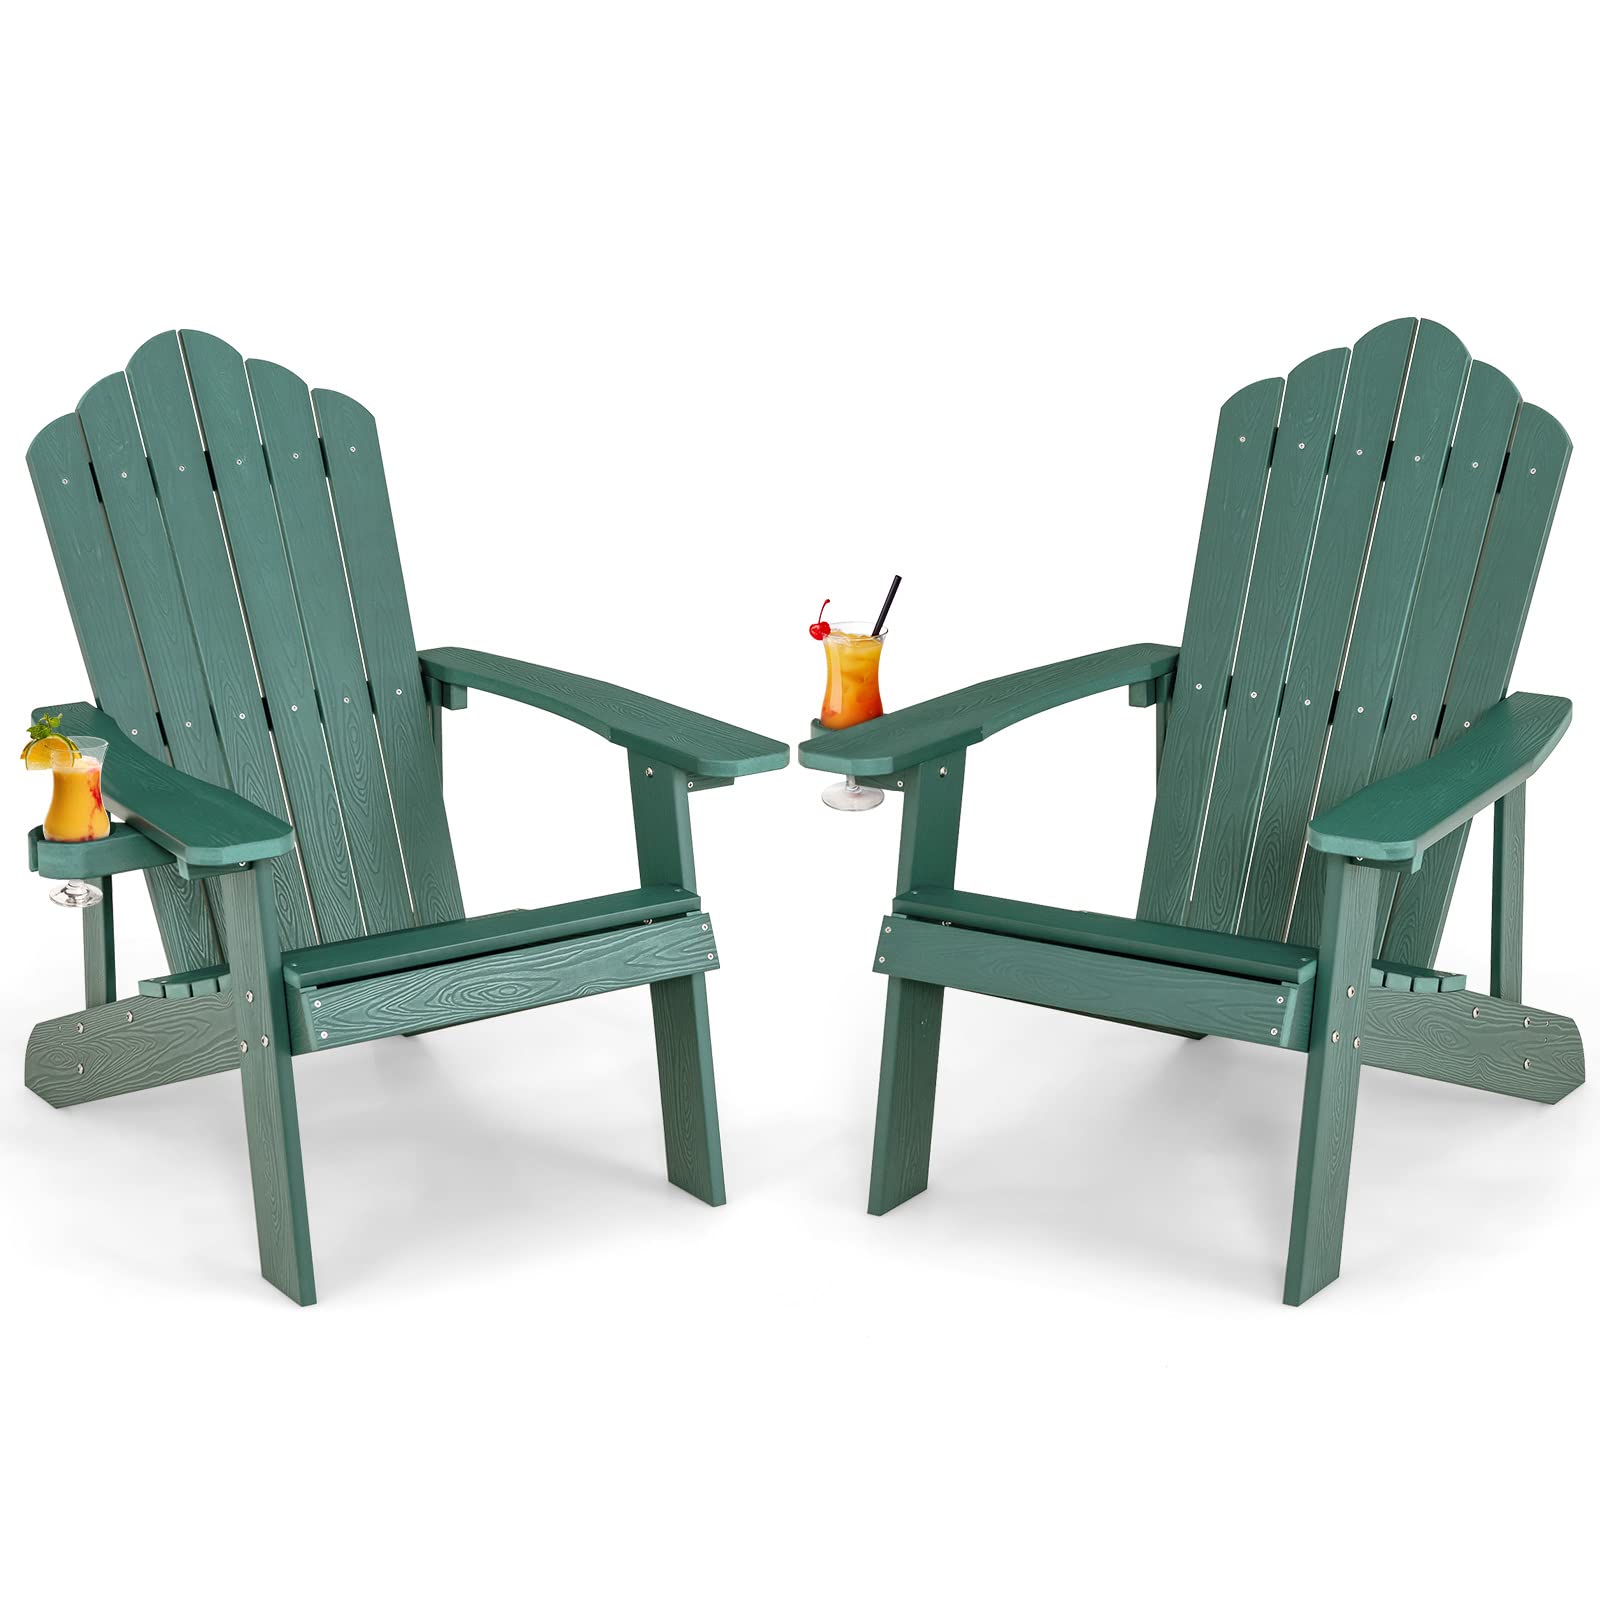 Giantex Outdoor Adirondack Chair, Dark Green